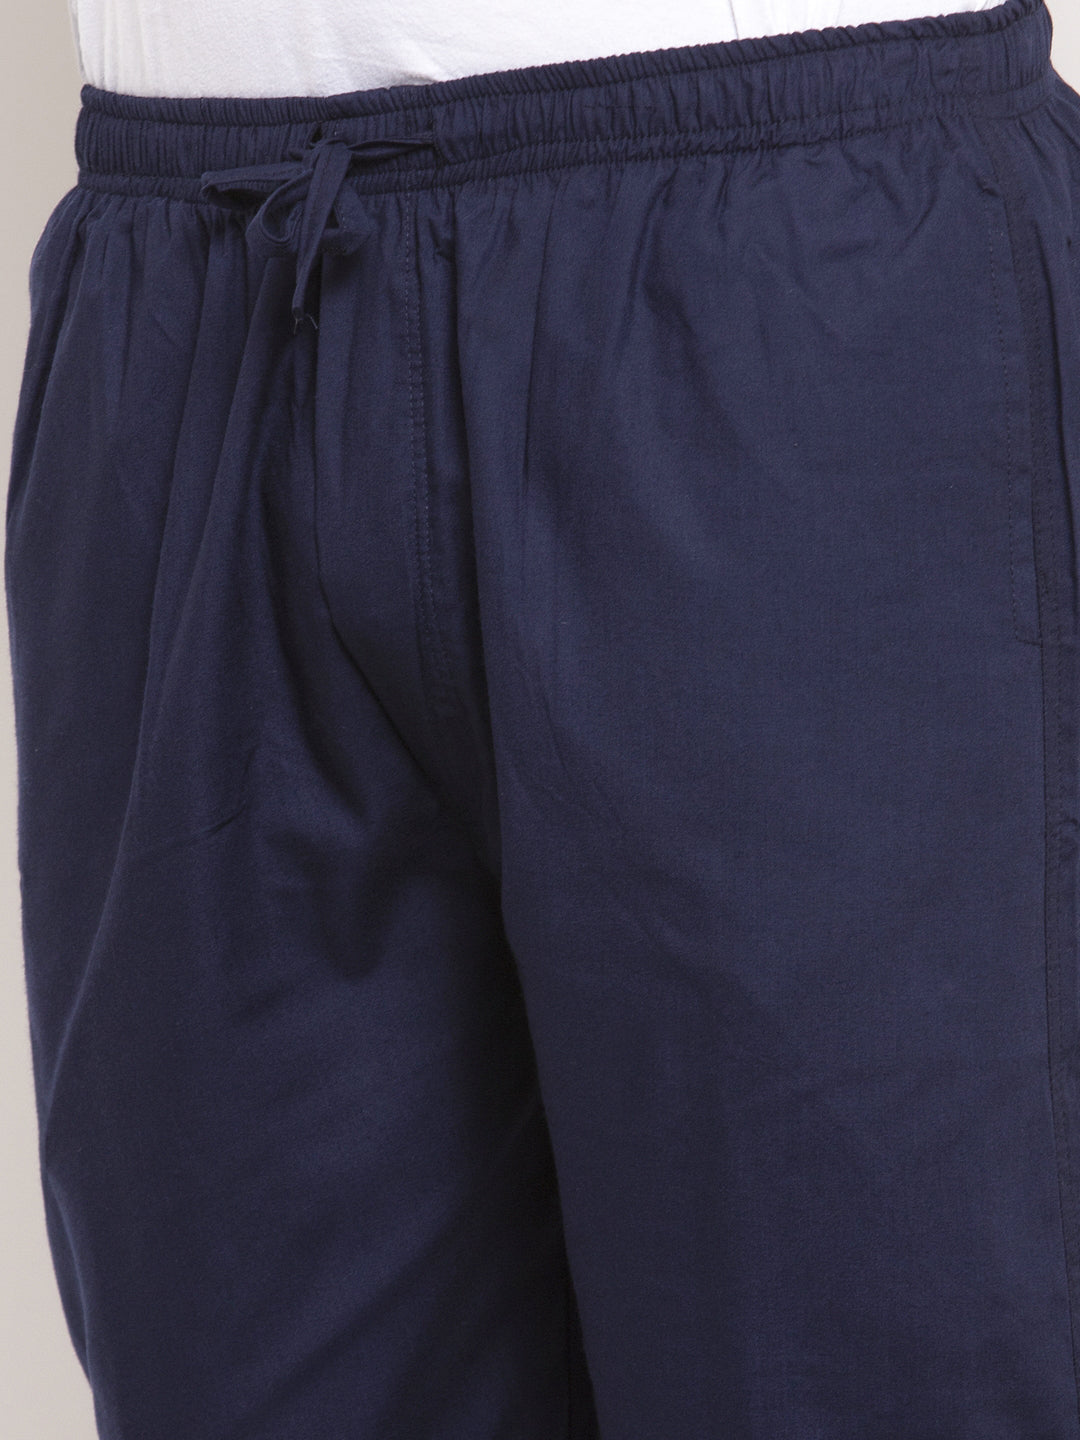 Men's Navy Blue Solid Cotton Track Pants ( JOG 011Navy ) - Jainish